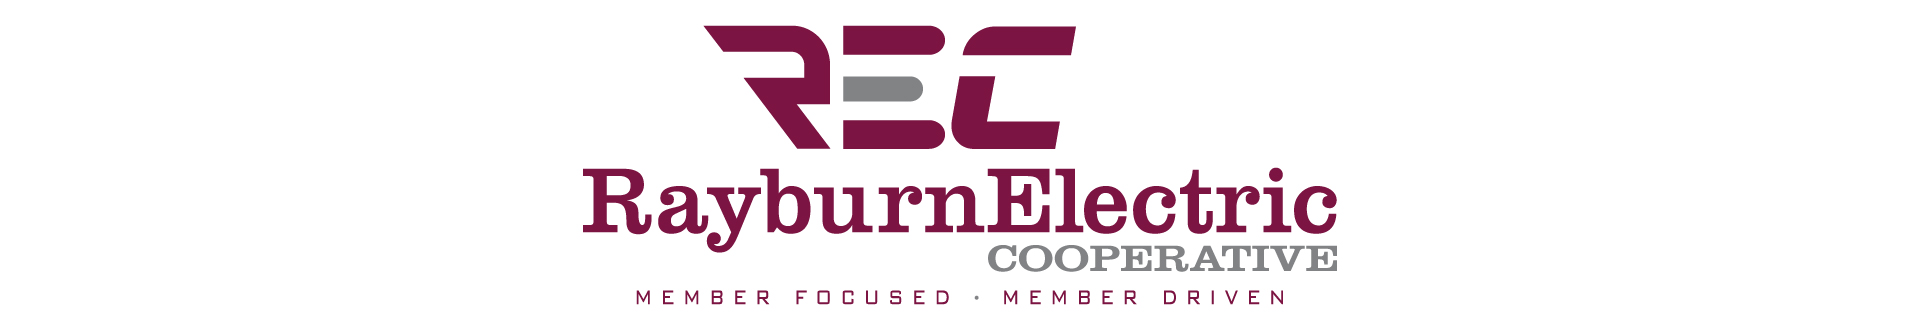 Rayburn Electric Cooperative Profile